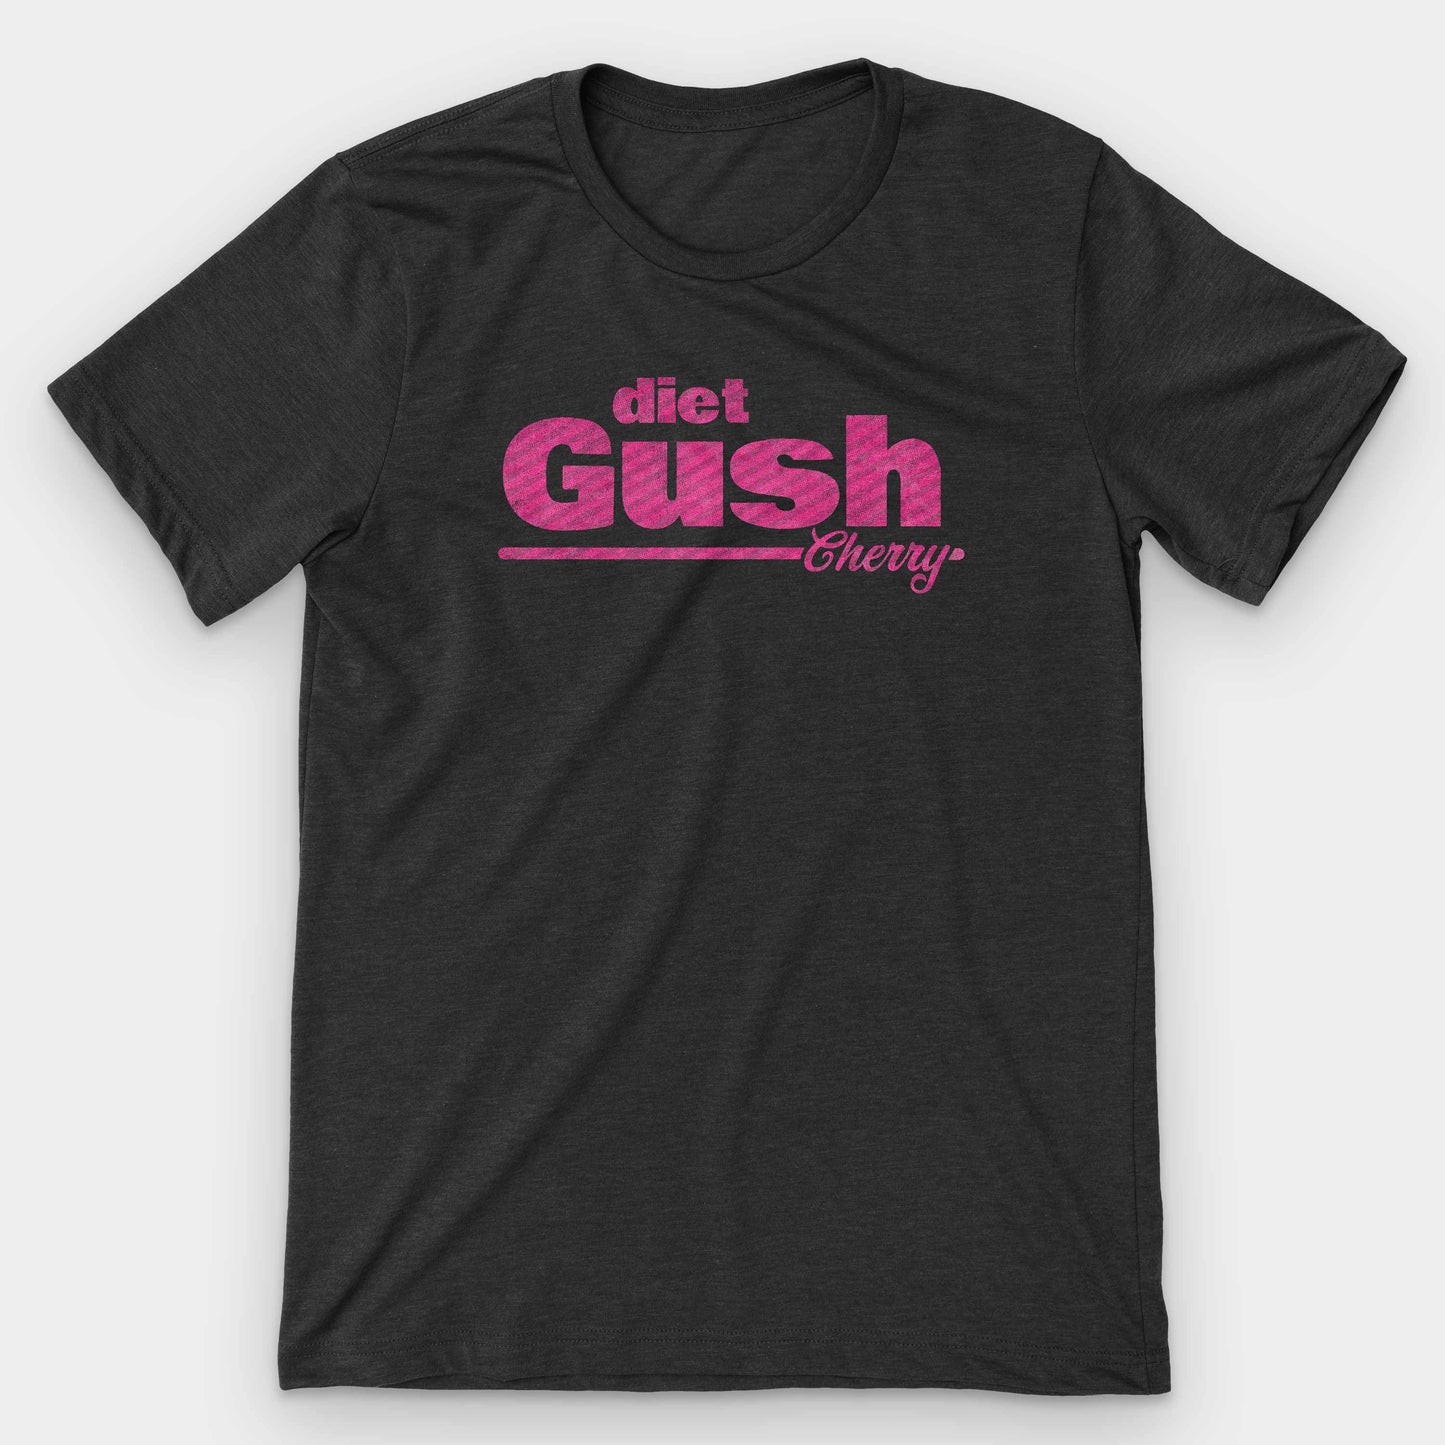 Black Heather Diet Gush Cherry Soda Graphic T-Shirt by Snaxtime